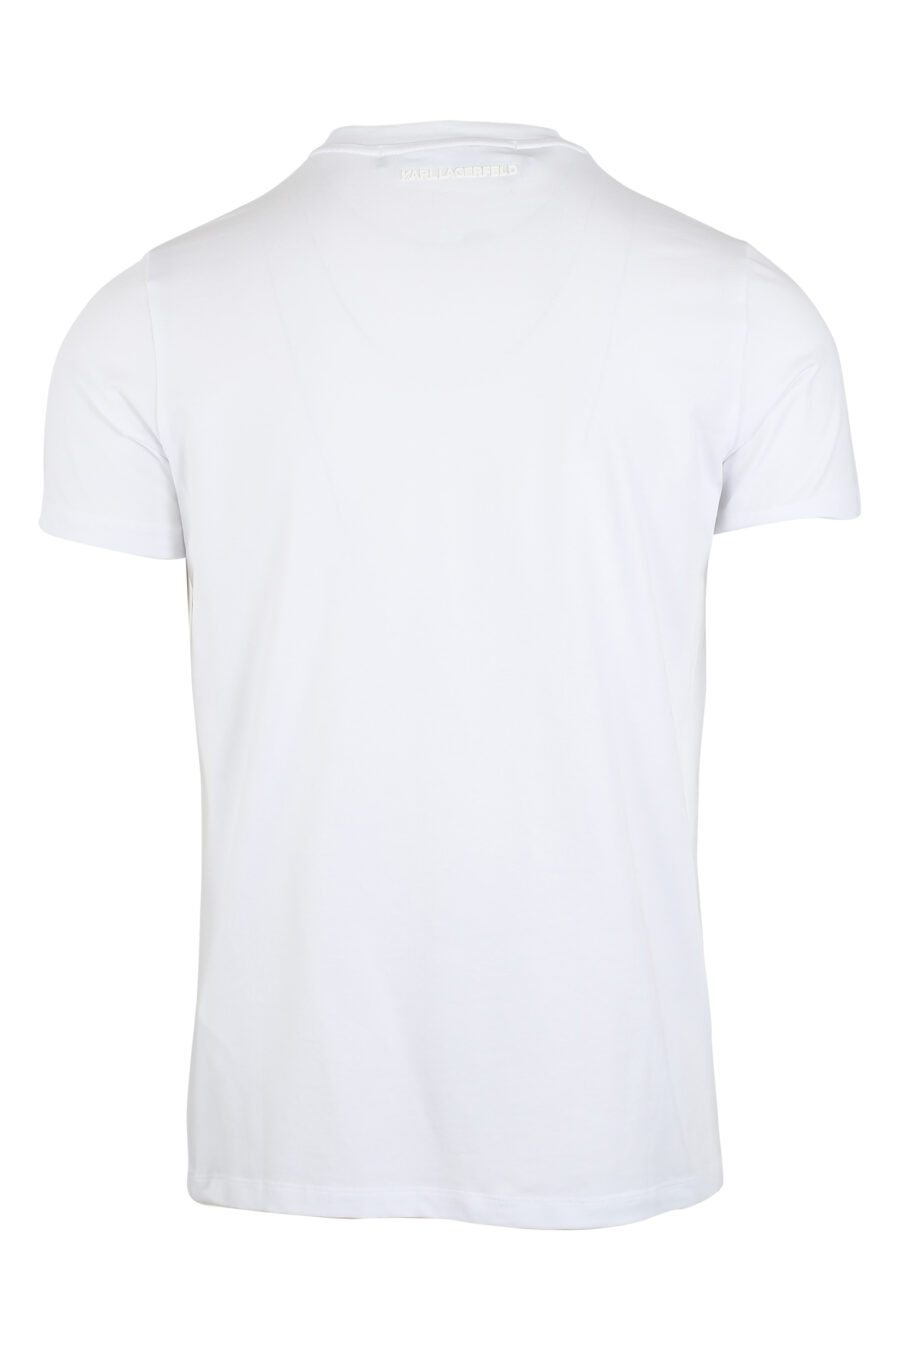 White T-shirt with hologram effect logo - IMG 9487